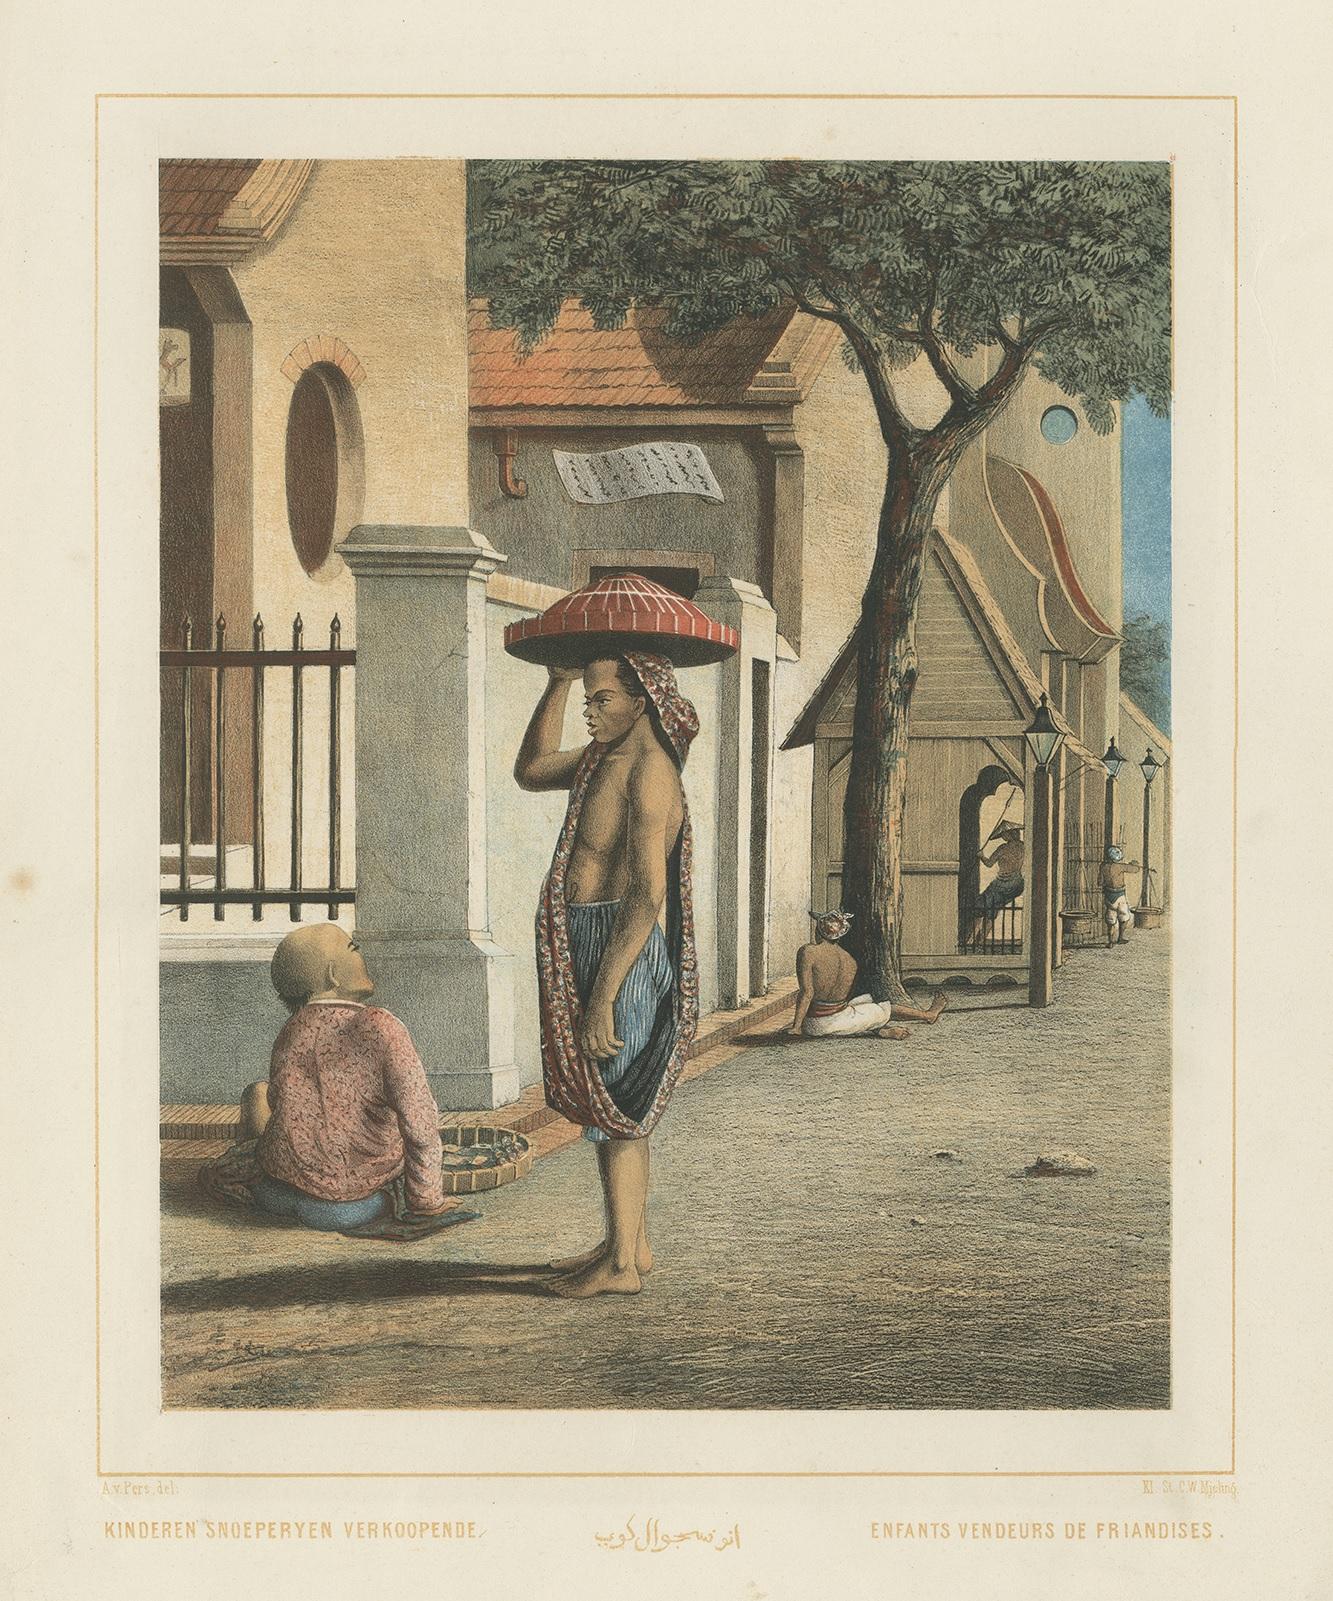 Antique print titled 'Kinderen snoeperyen verkoopende - Enfants venduers de Friandises'. Colored lithograph of Javanese children selling candy. This print originates from 'Nederlandsch Oost-Indische typen' after work by Auguste van Pers (1815-1871)